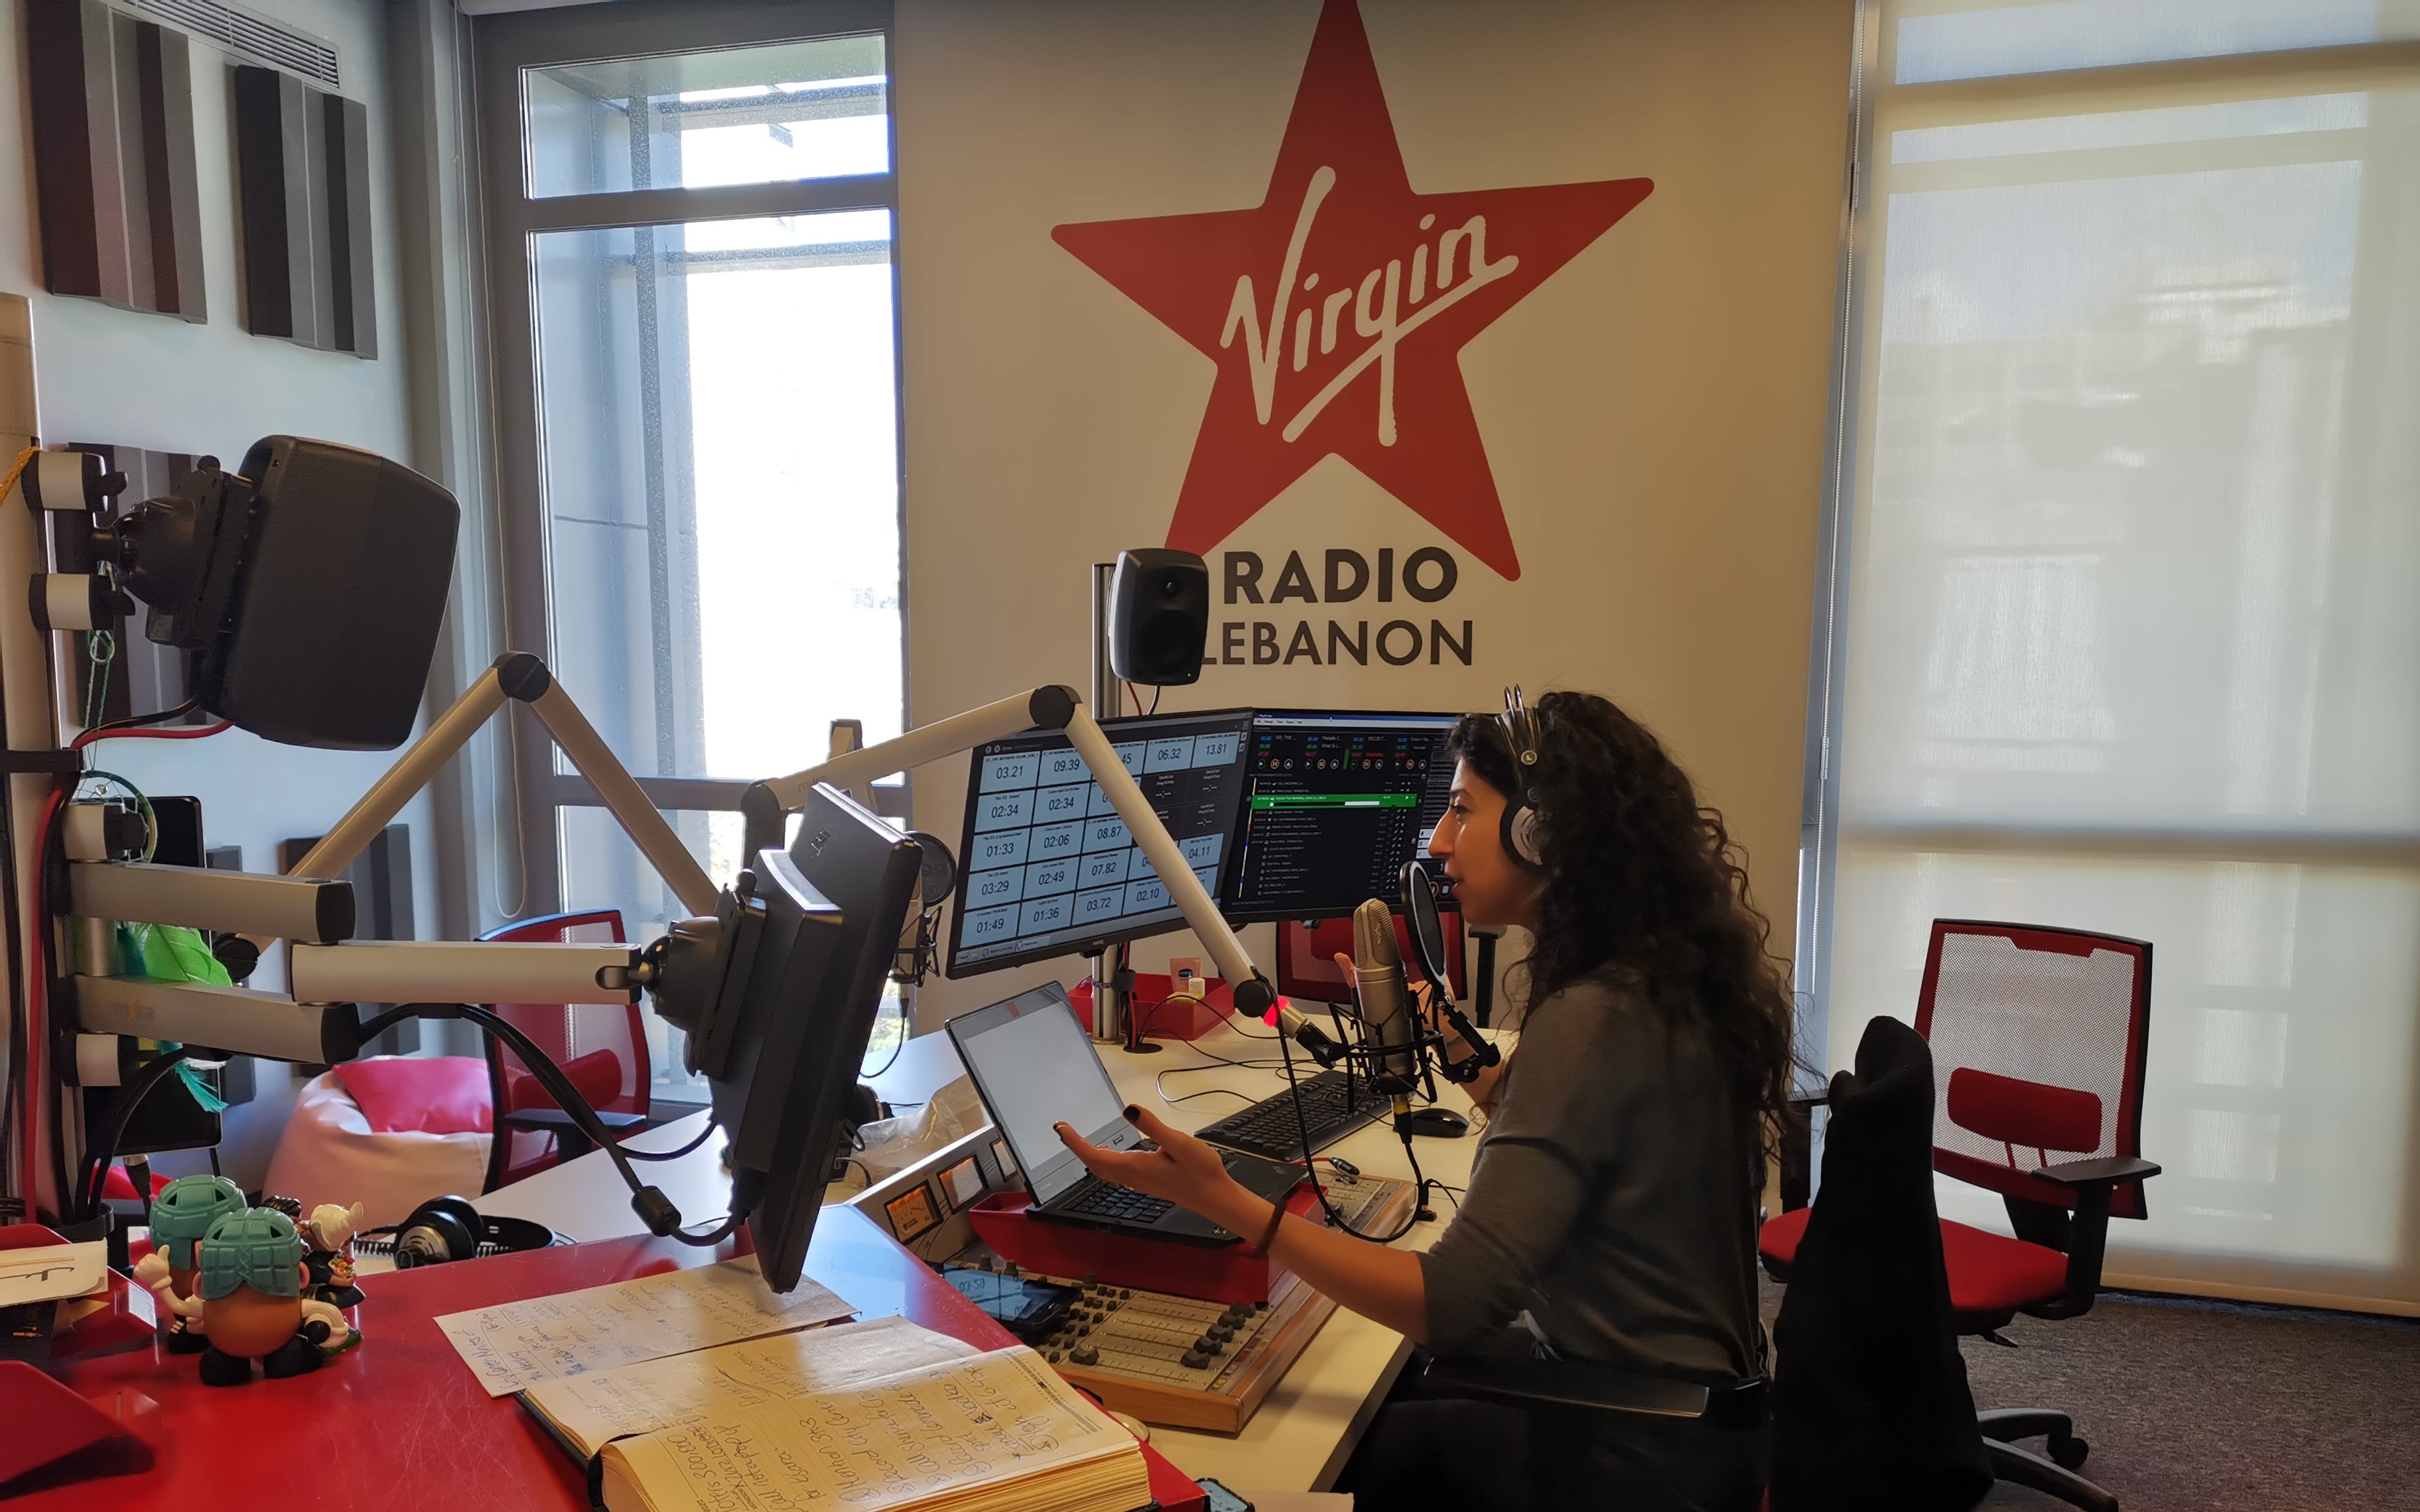 A studio at Virgin Radio Lebanon